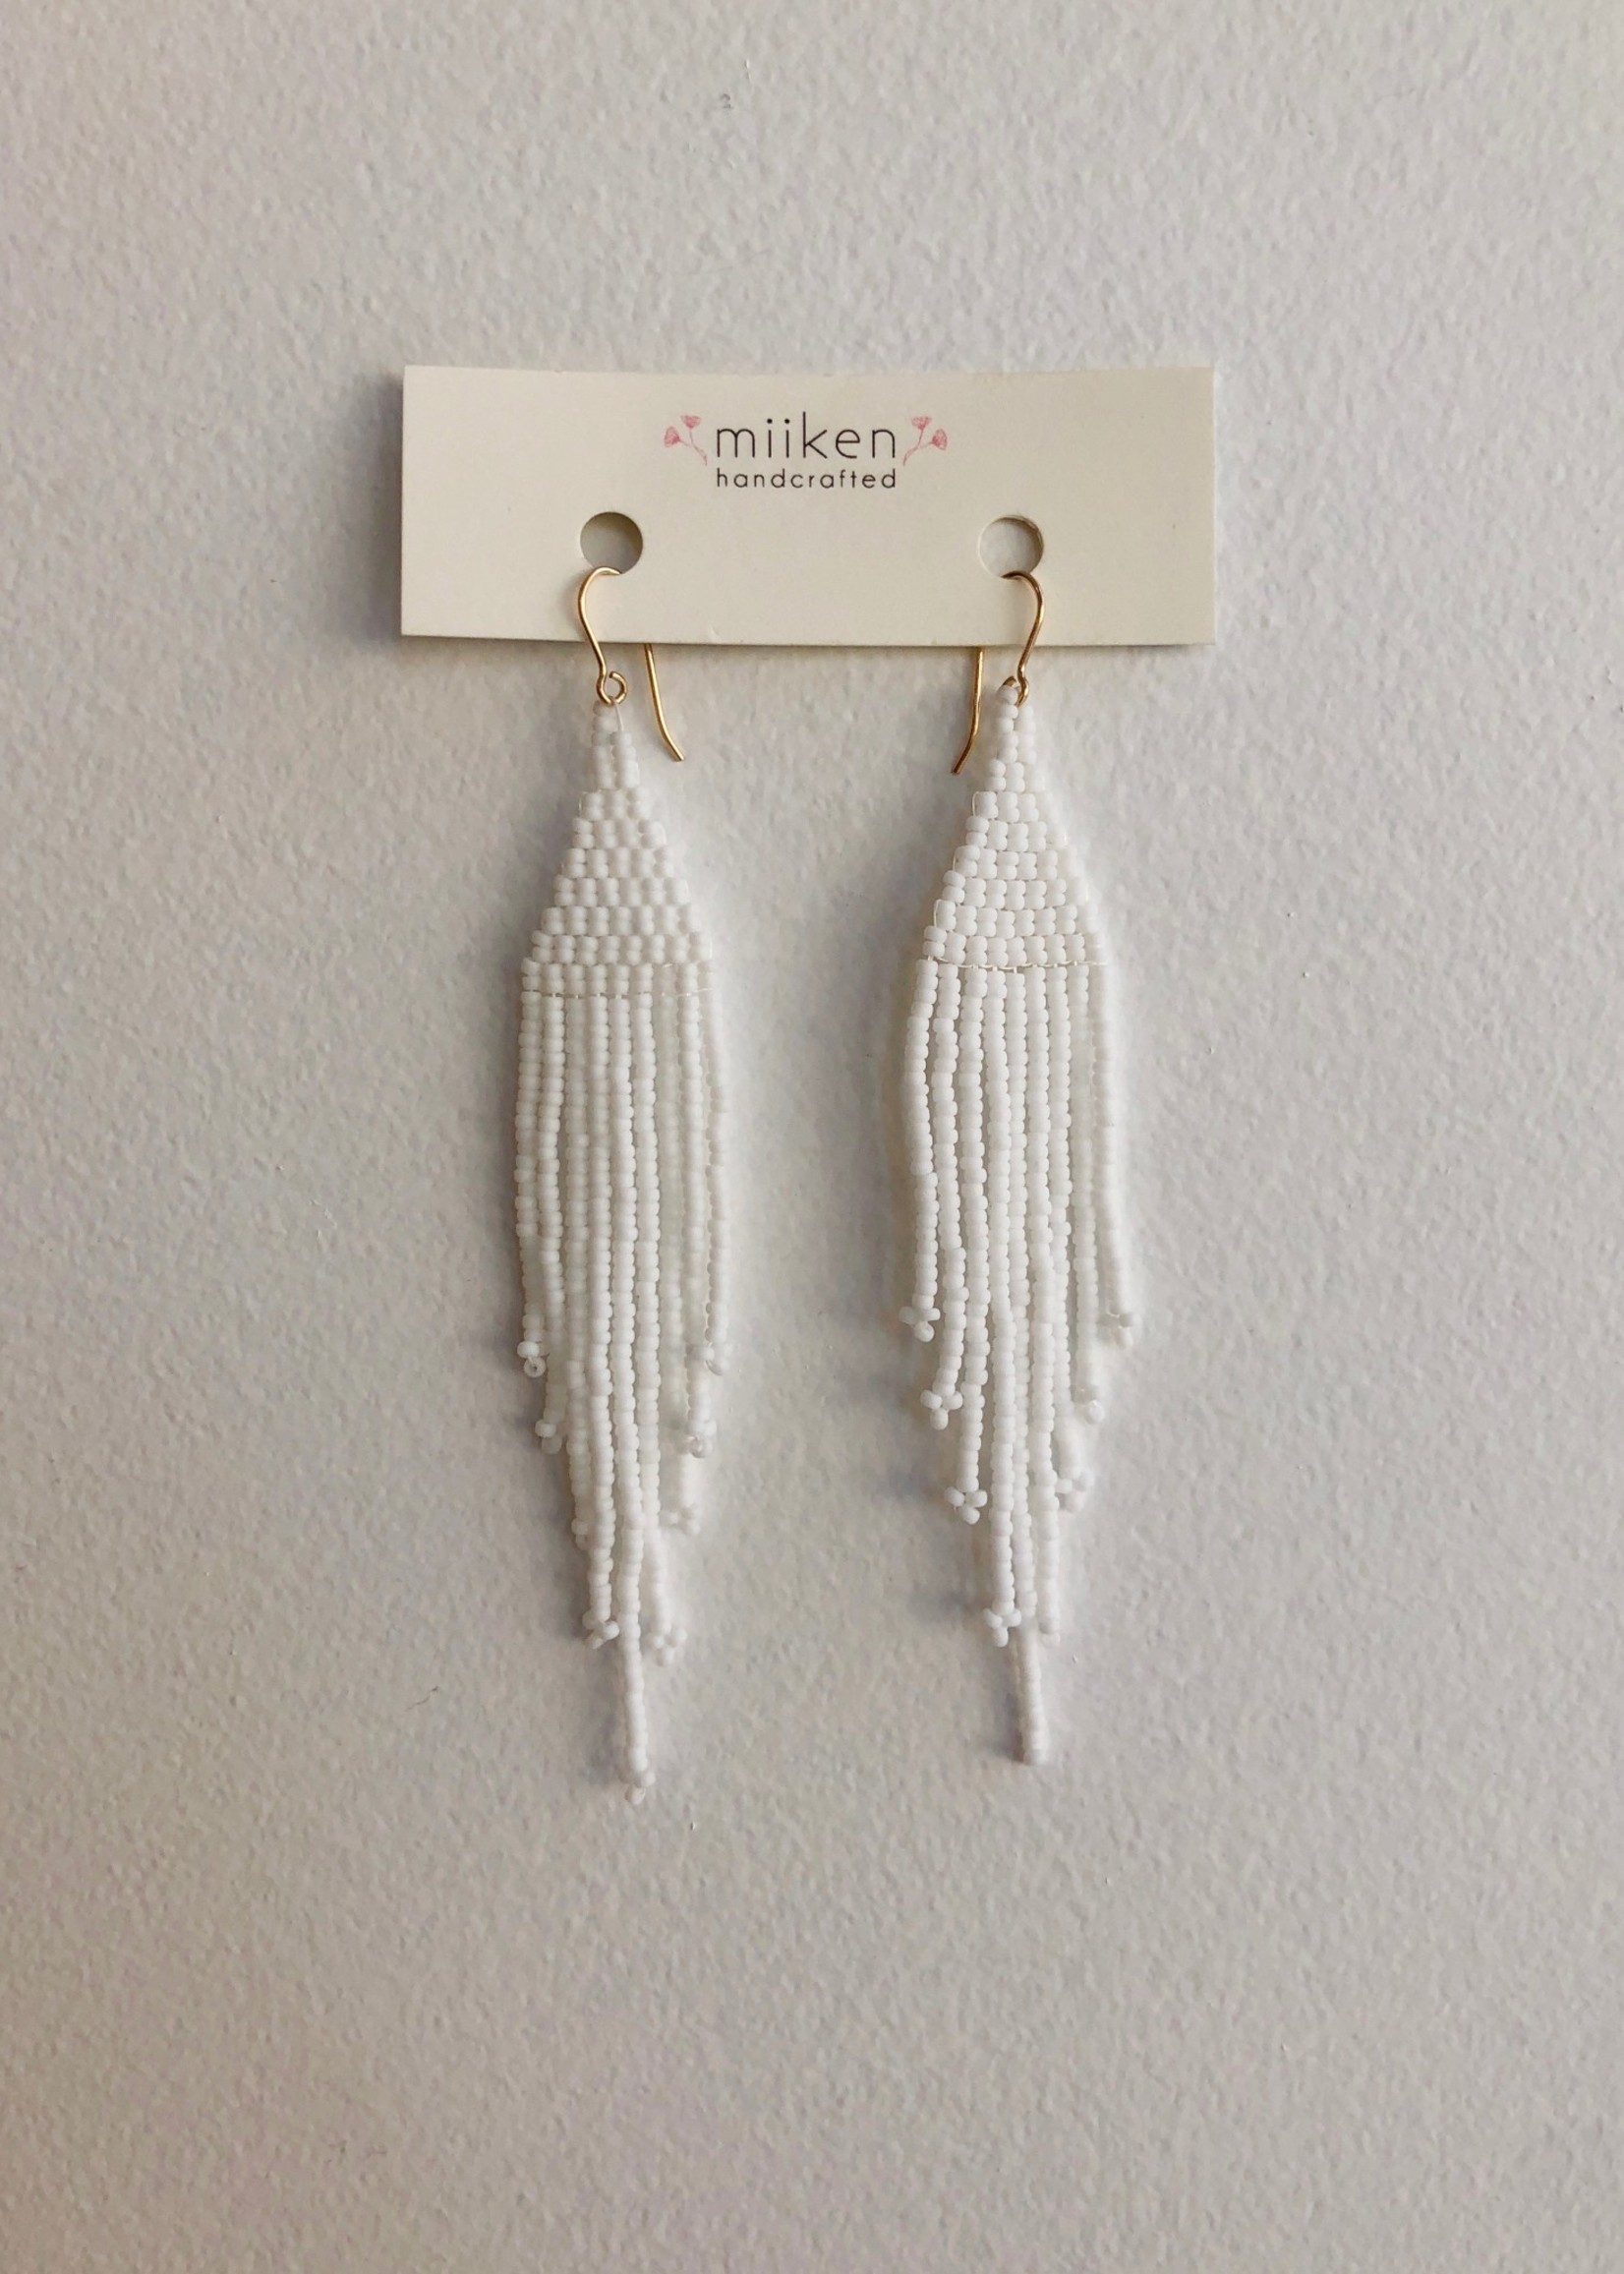 Miiken Handcrafted Boucles d'oreilles "Fringe" par Miiken Handcrafted